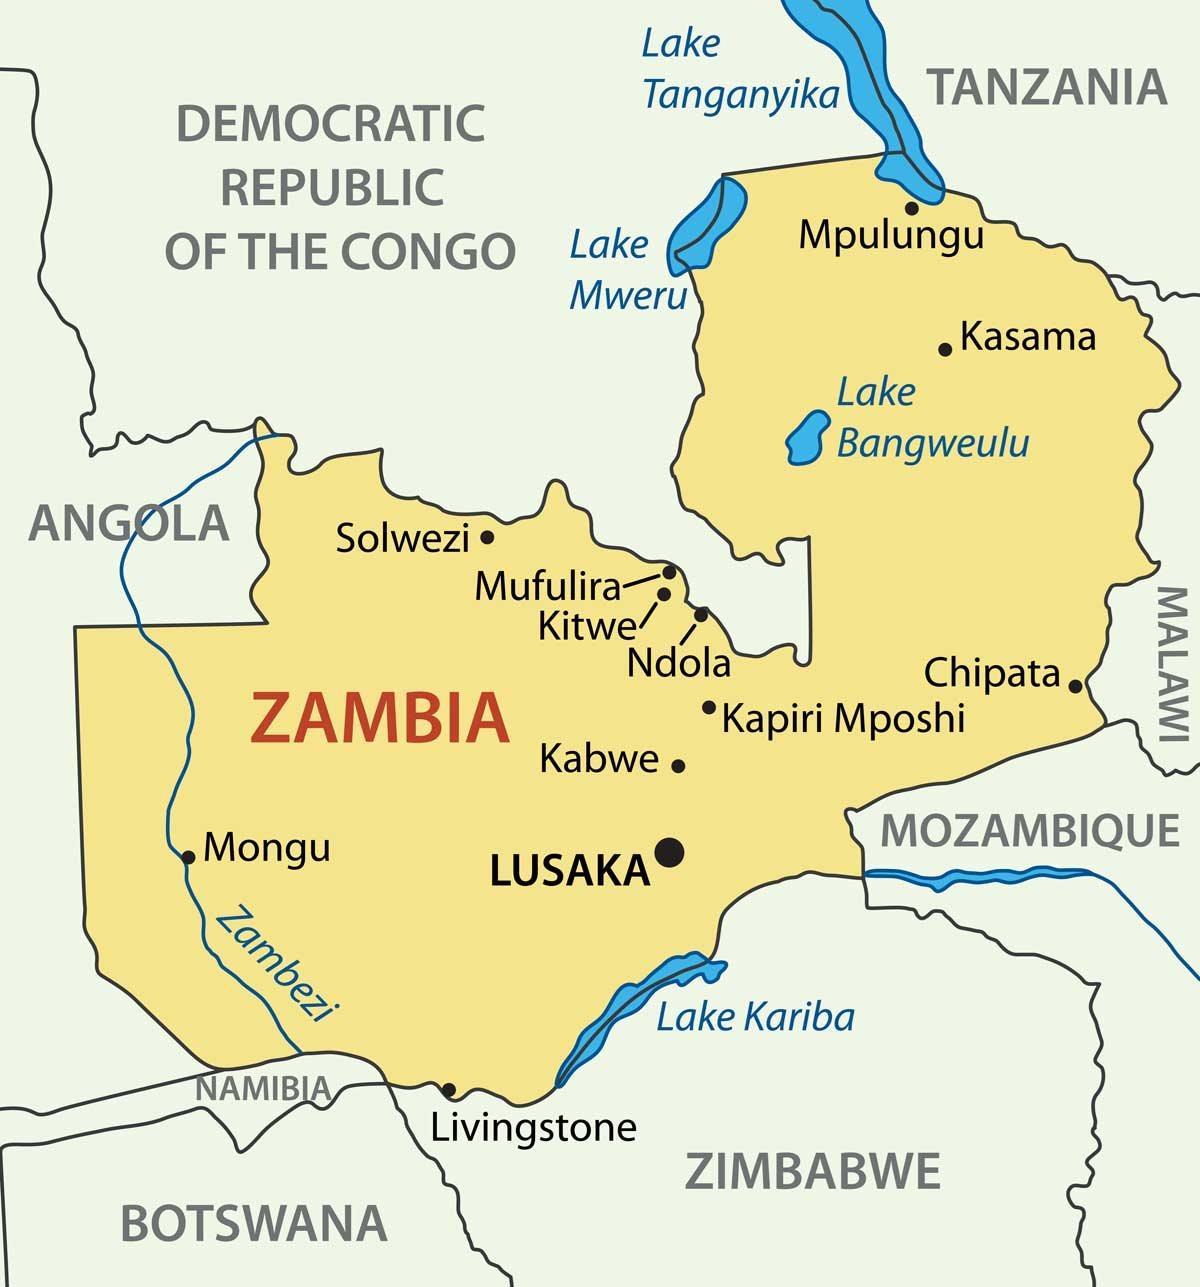 Peta dari kitwe Zambia